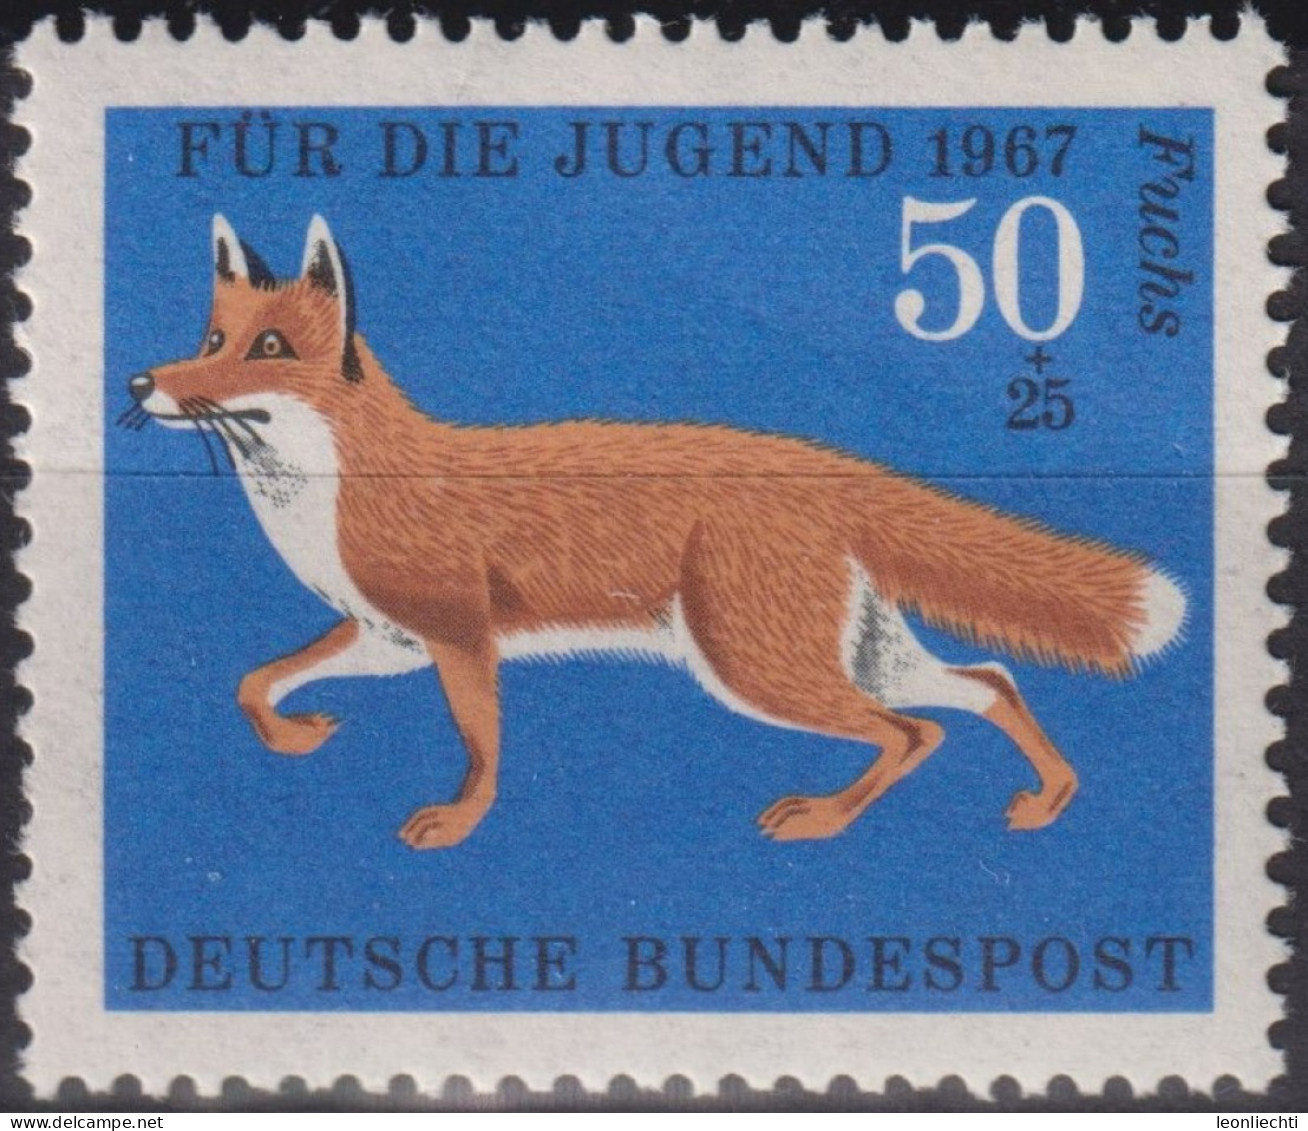 1967 Deutschland > BRD, ** Mi:DE 532, Sn:DE B425, Yt:DE 390, Fuchs, Red Fox (Vulpes Vulpes) - Game